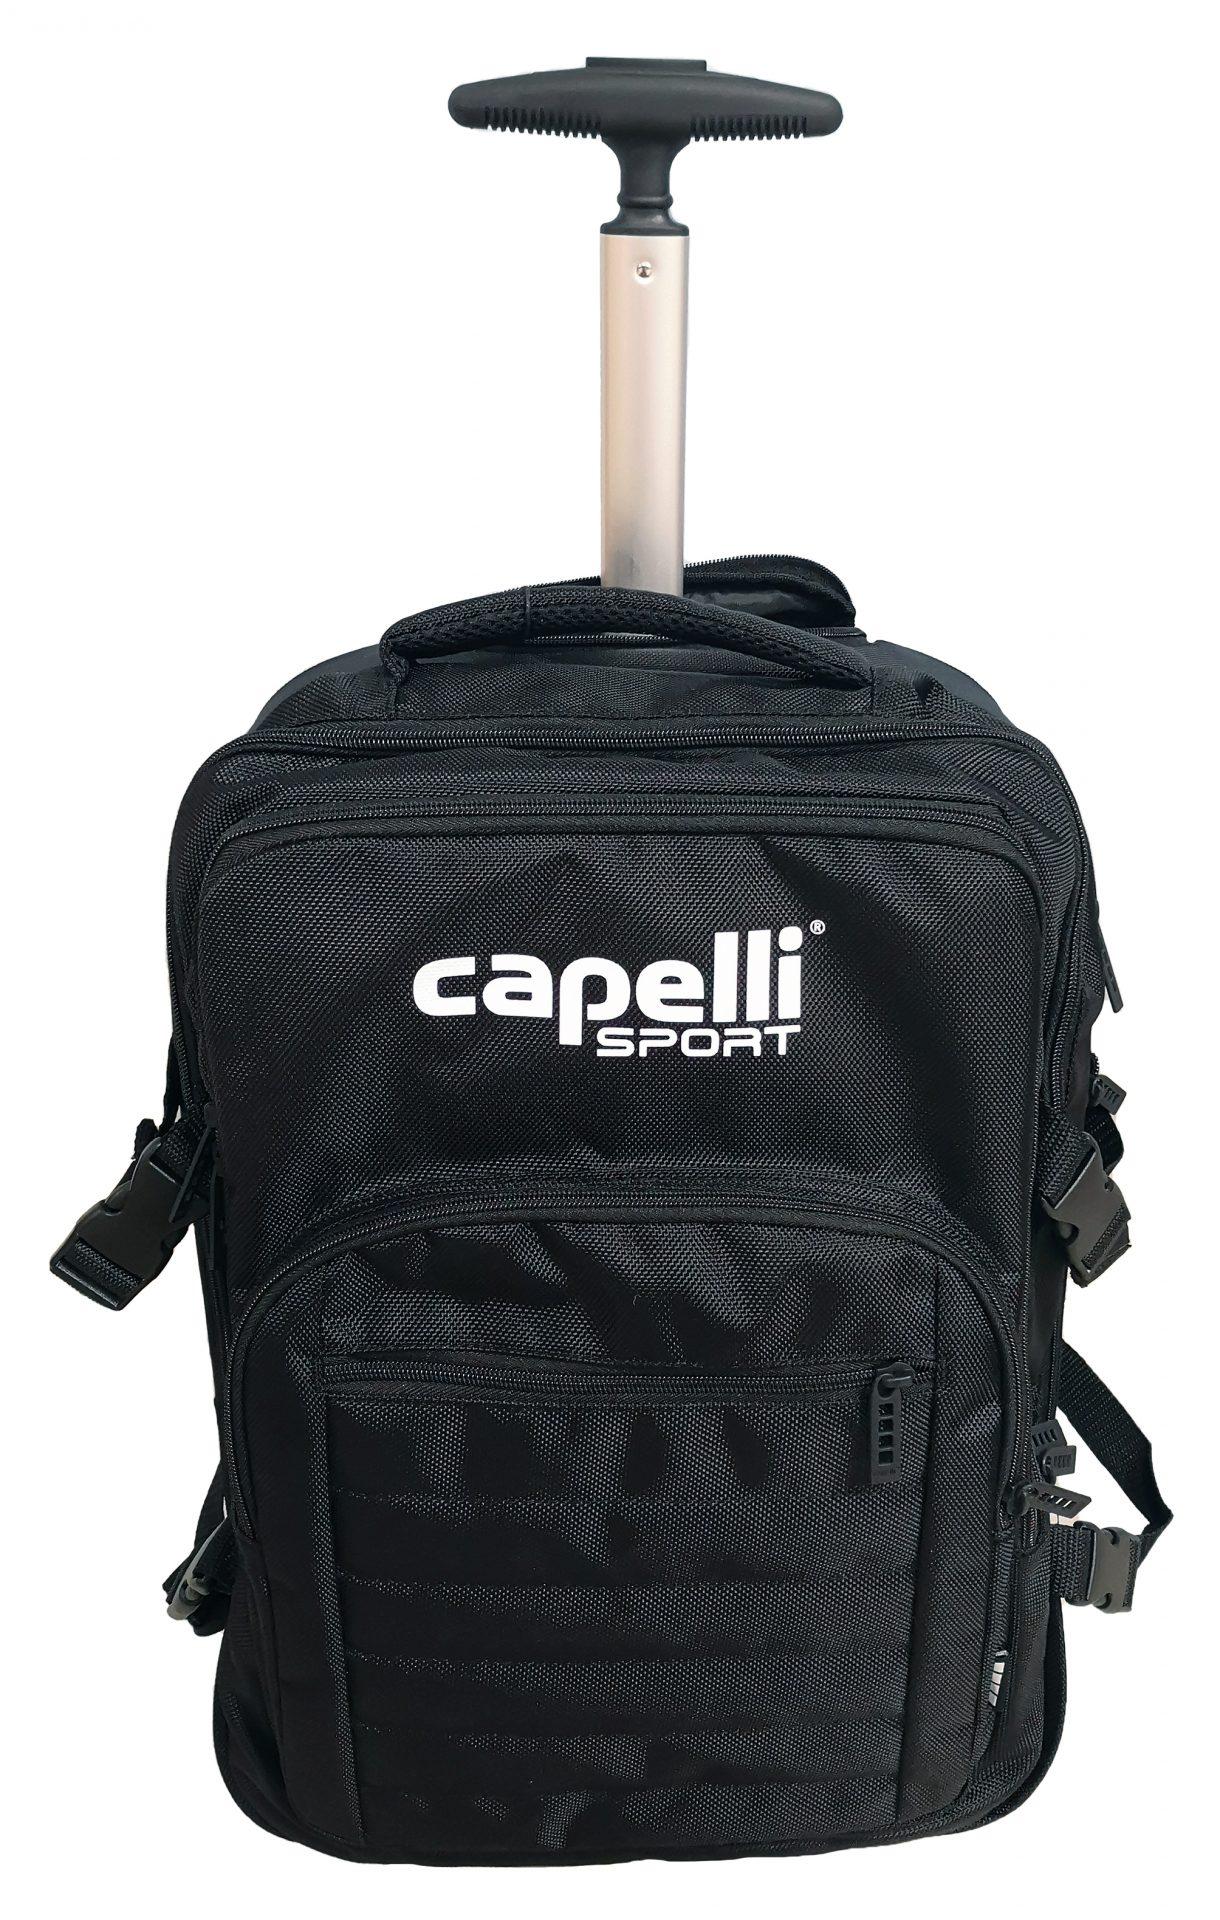 Capelli Sport Wheeled Trolley Bag - CAPELLI SPORT Europe